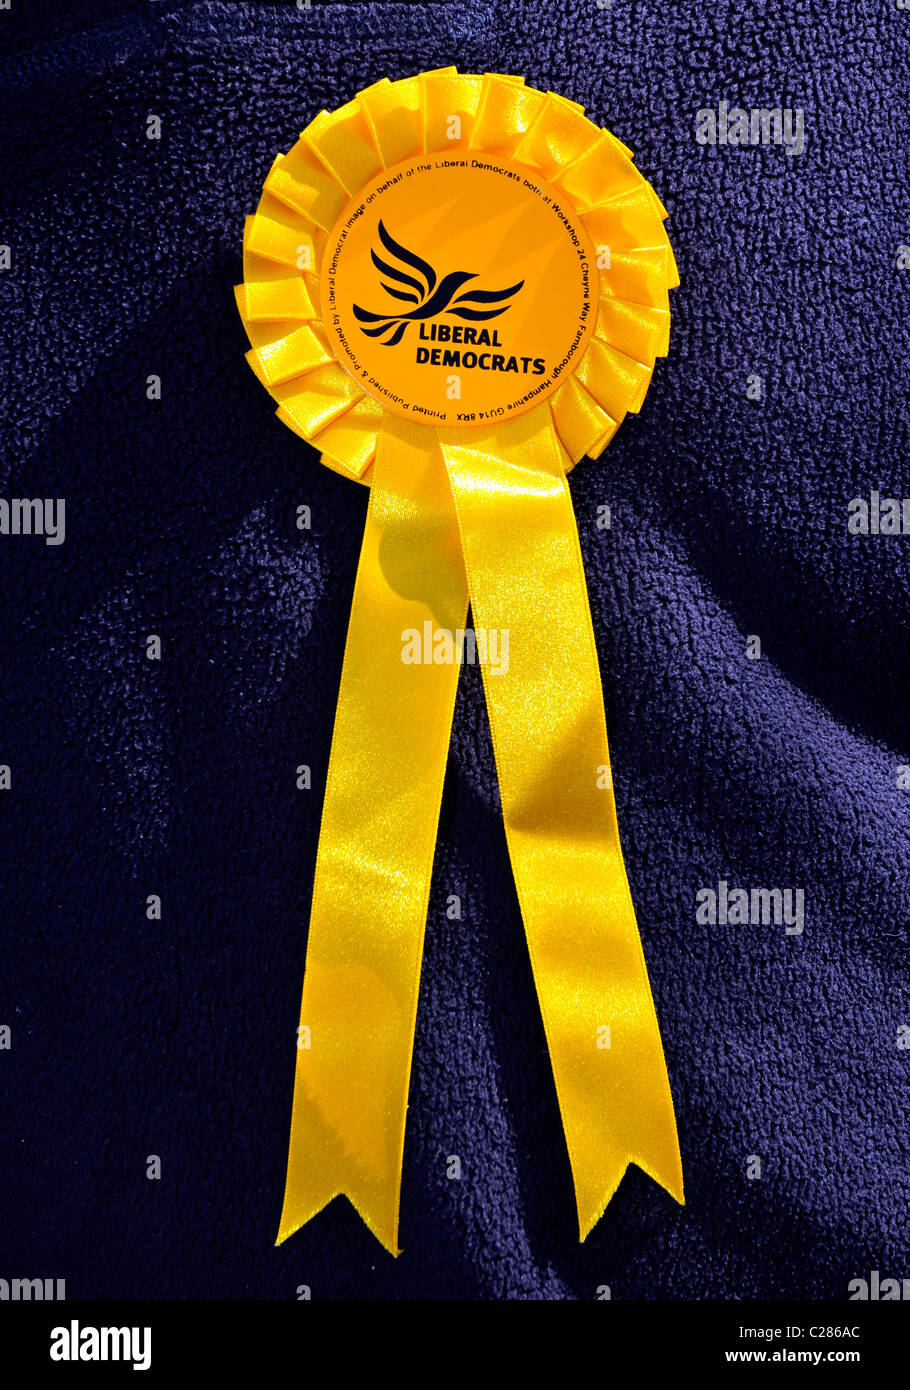 Liberal Democrats political party rosette, Britain, UK Stock Photo